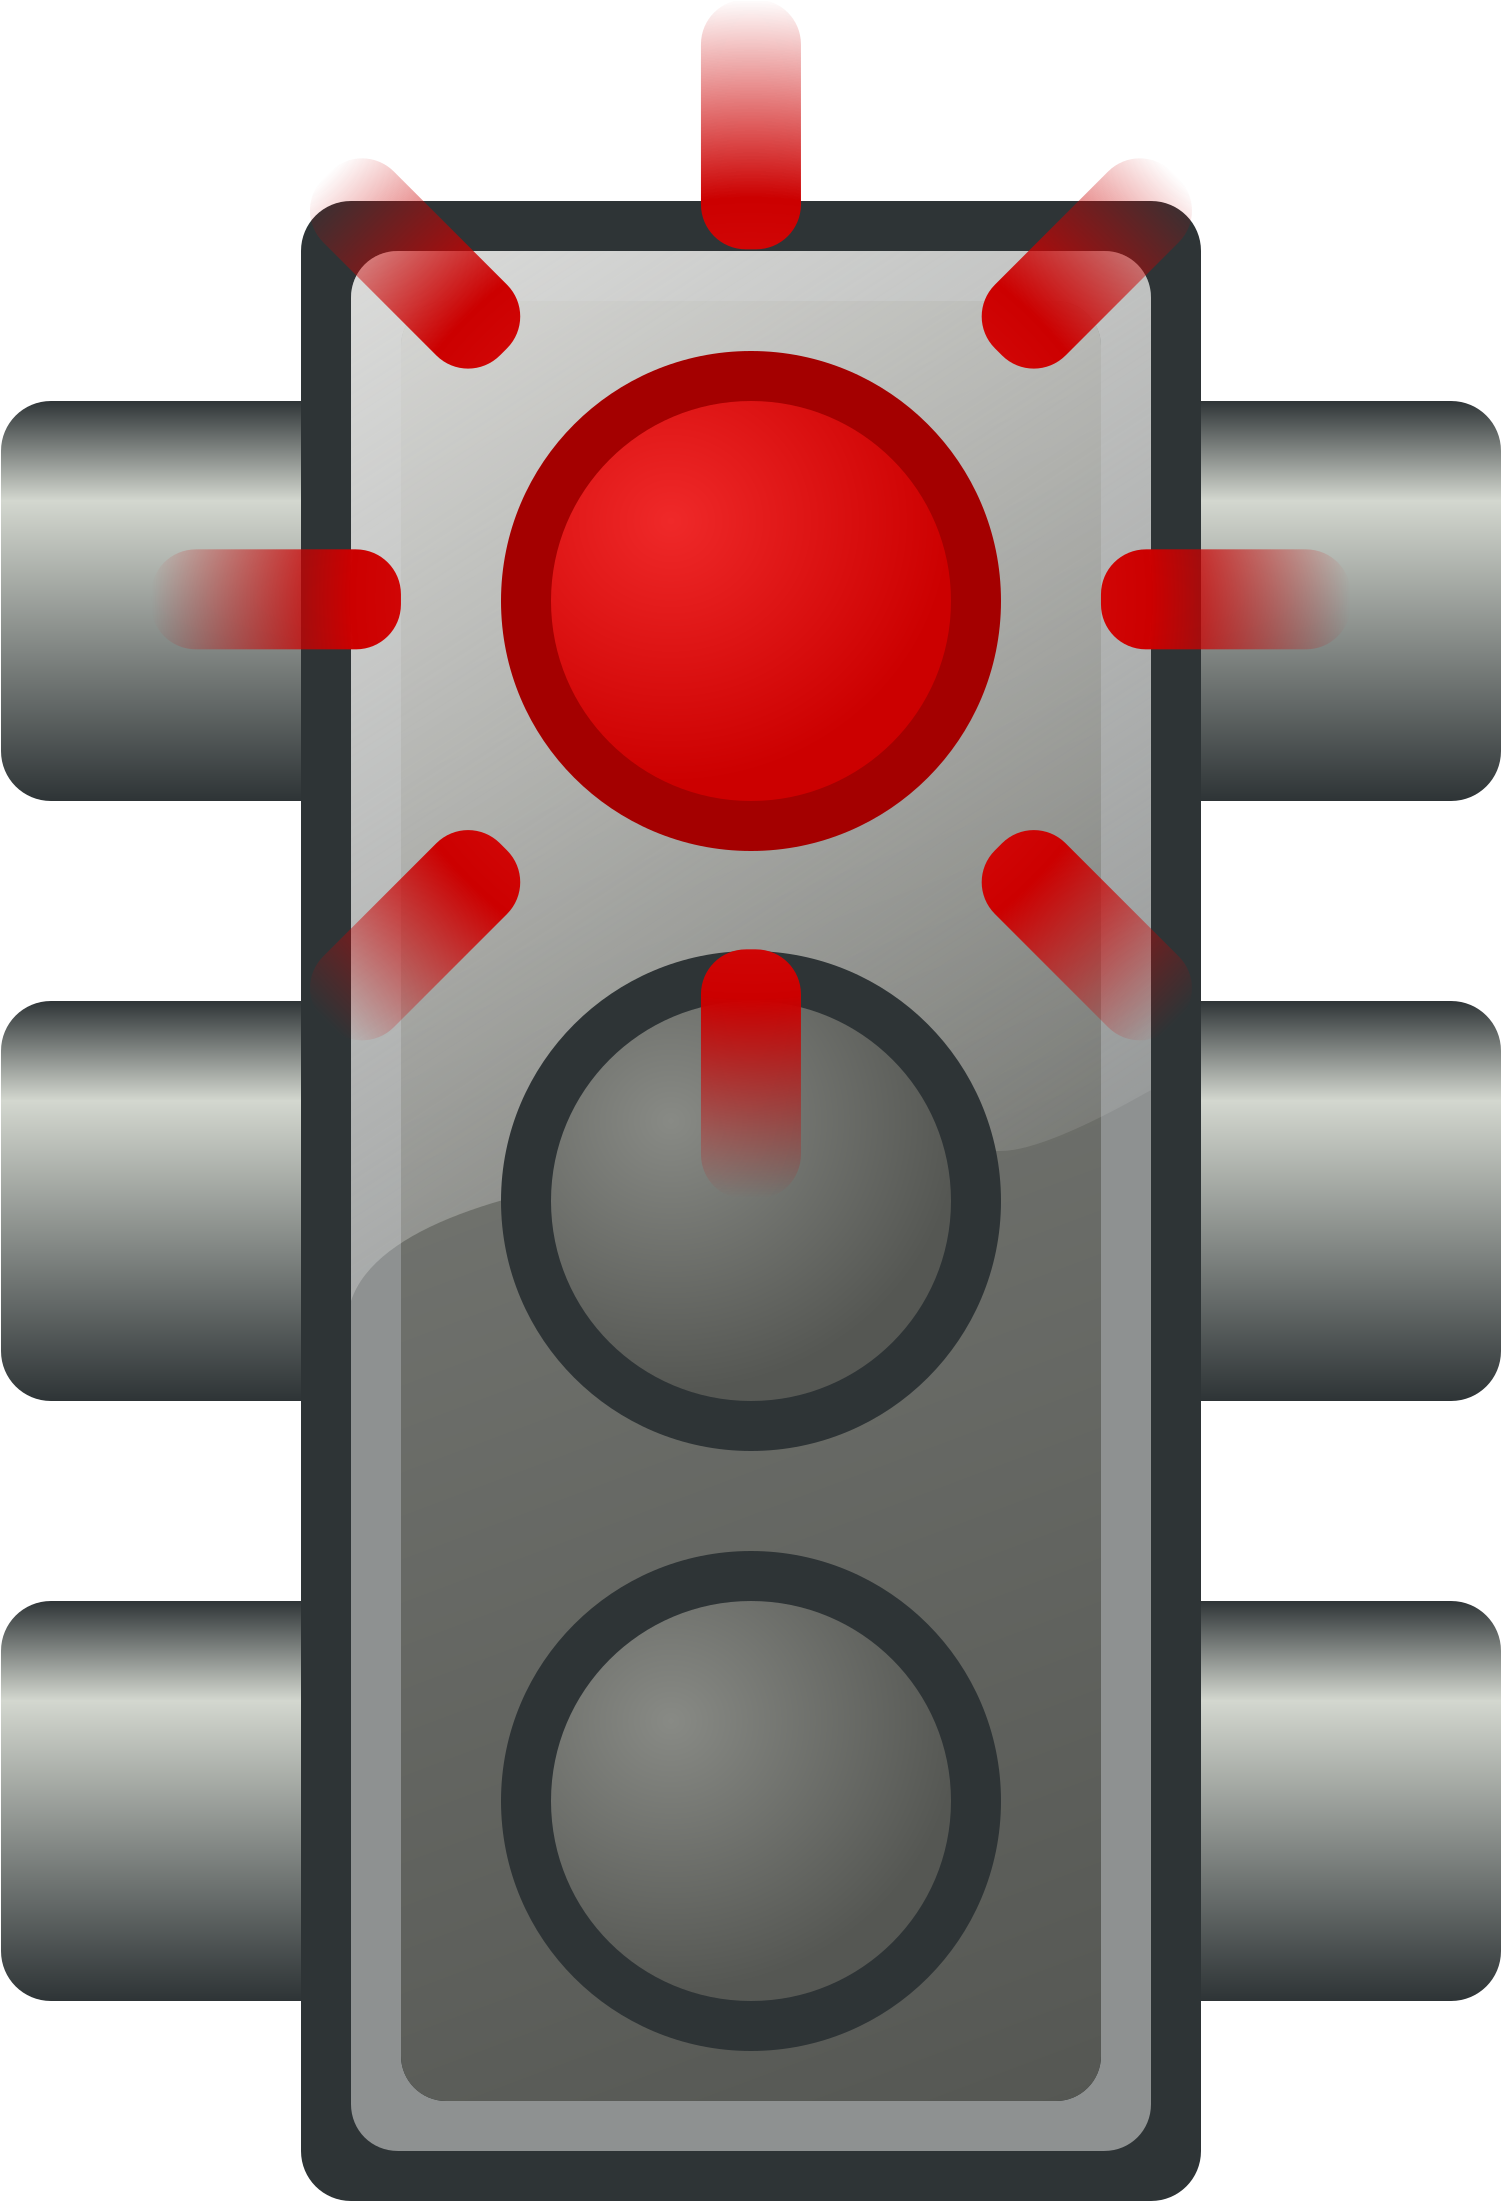 Flashing Red Traffic Light - Flashing Red Stop Light (2400x2400)